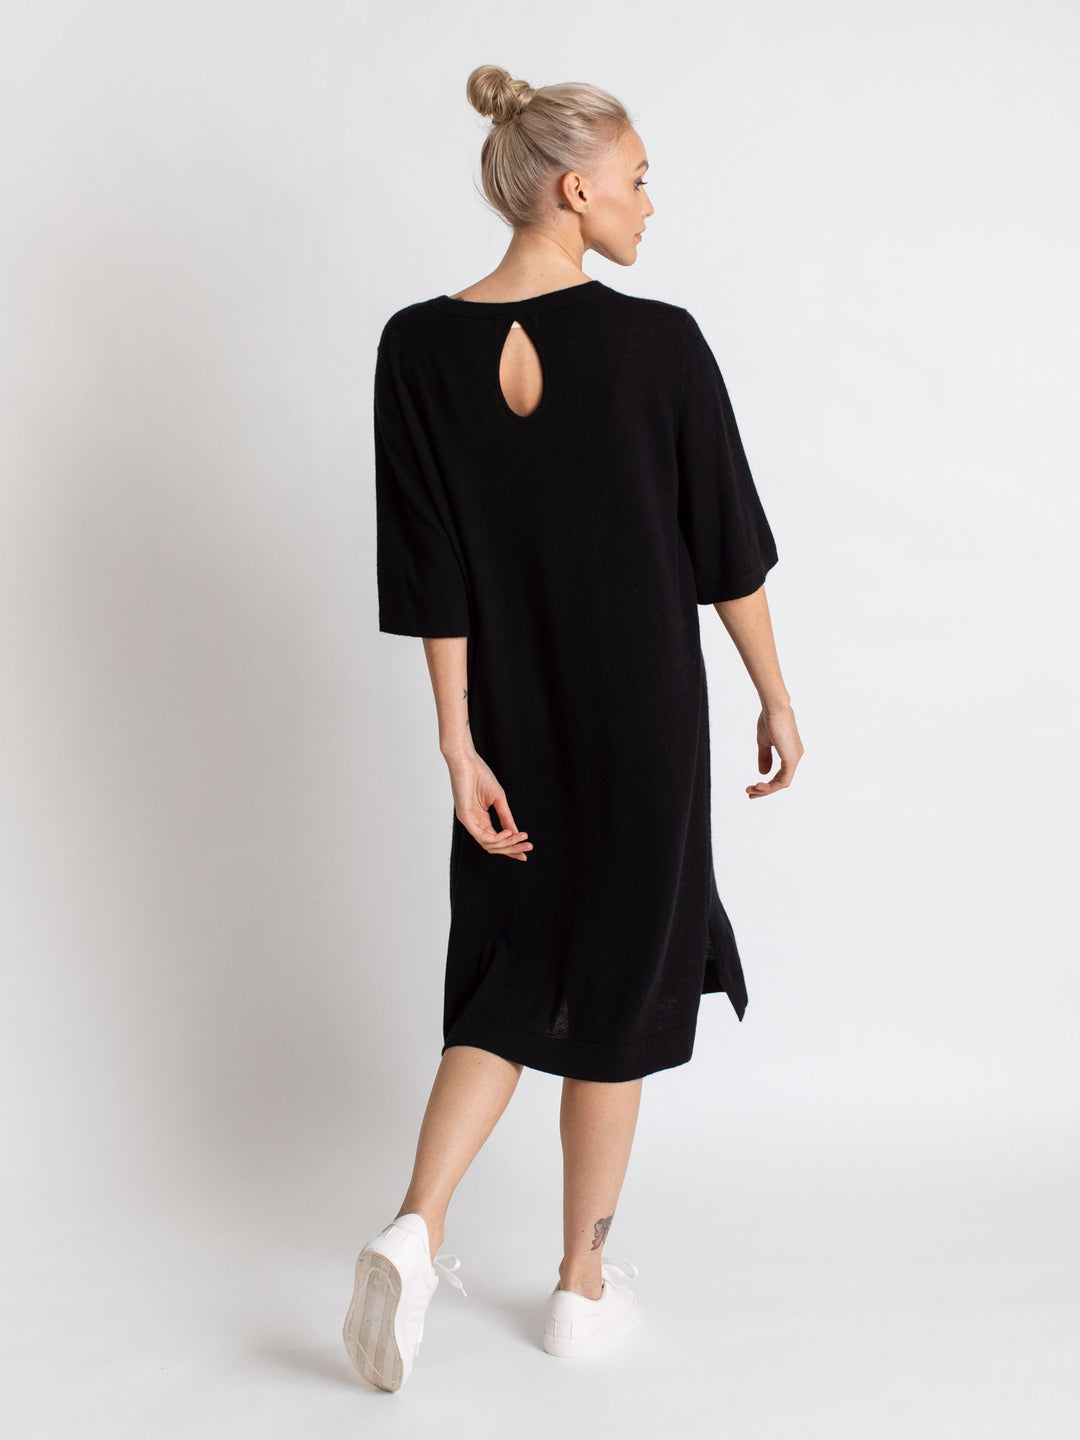 Cashmere "Tunic" in 100% pure cashmere. Color: black. Scandinavian design by Kashmina.